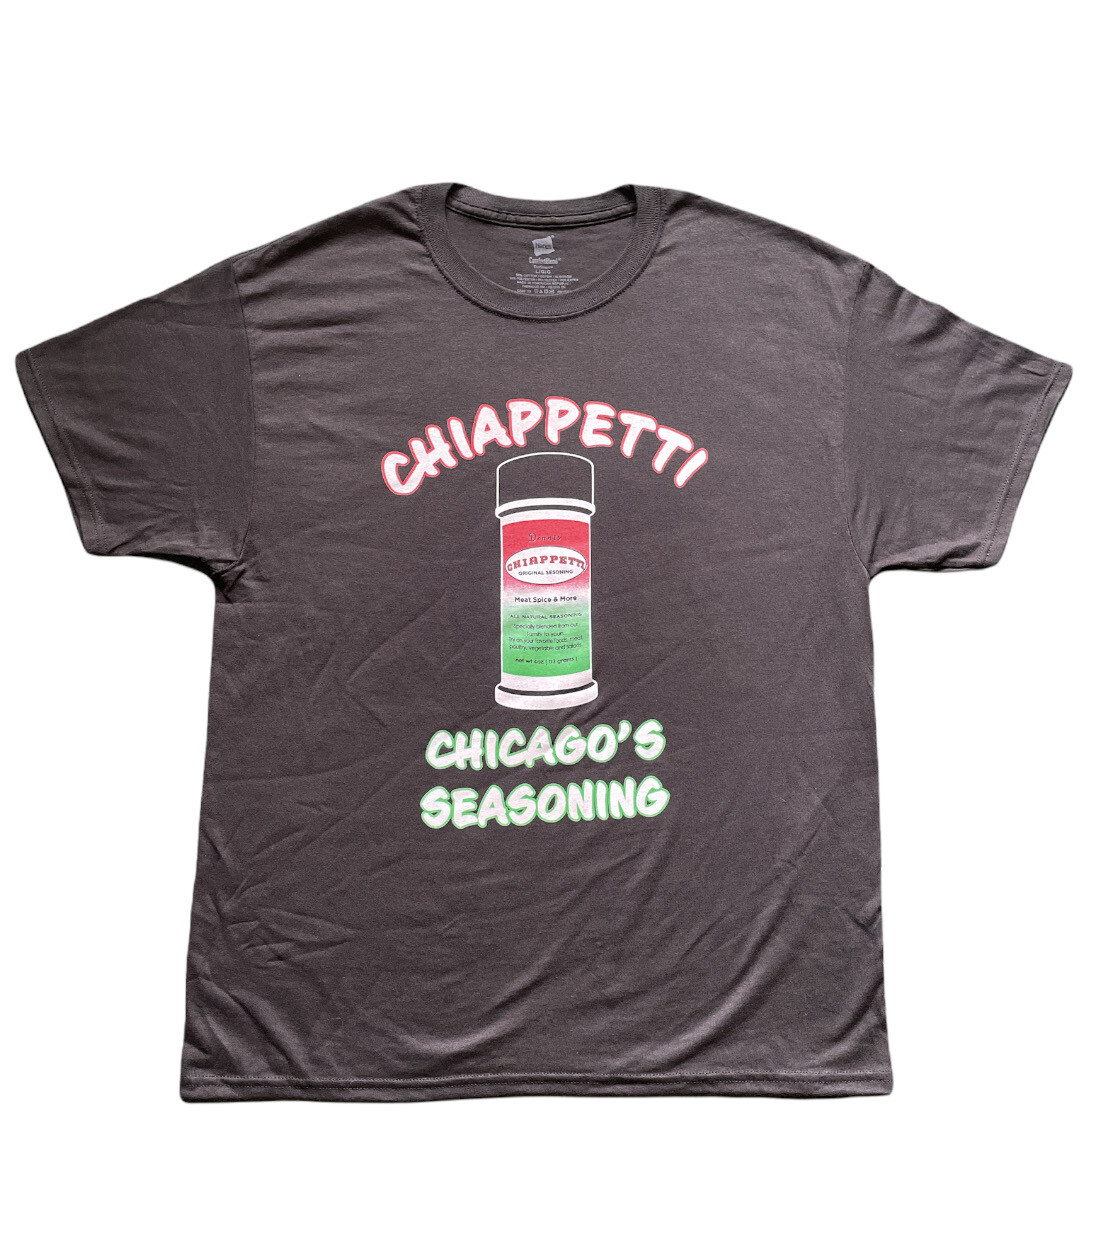 Chiappetti Seasoning Chicago's Seasoning Tee